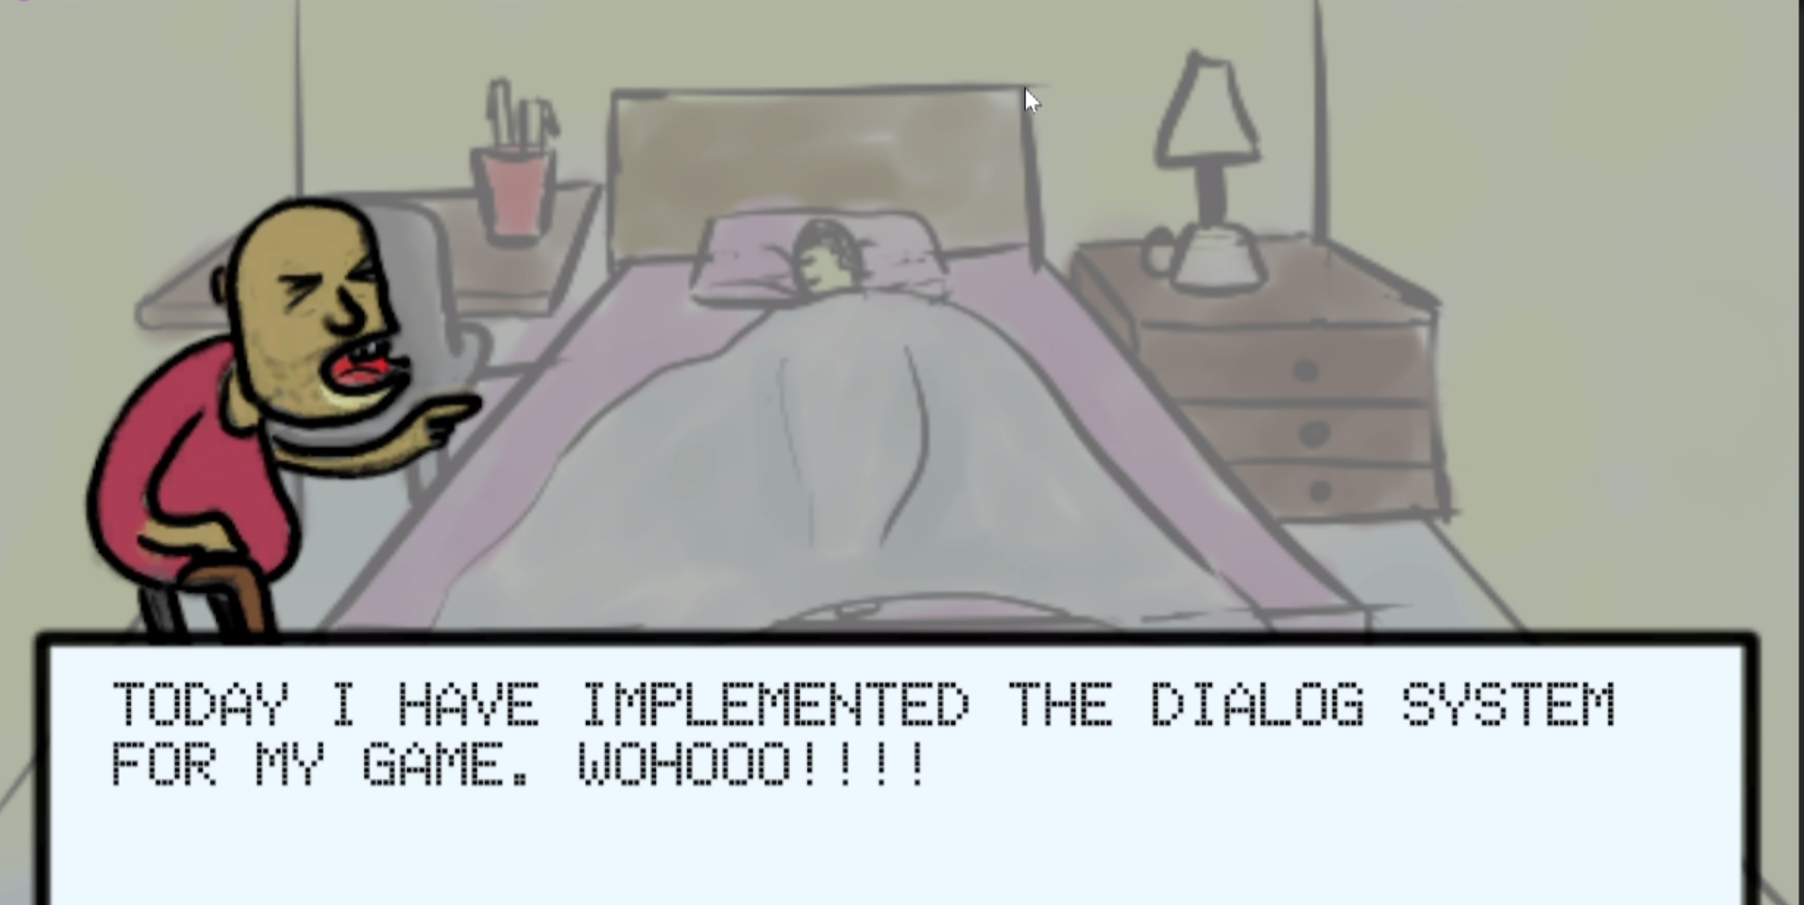 Dialog System